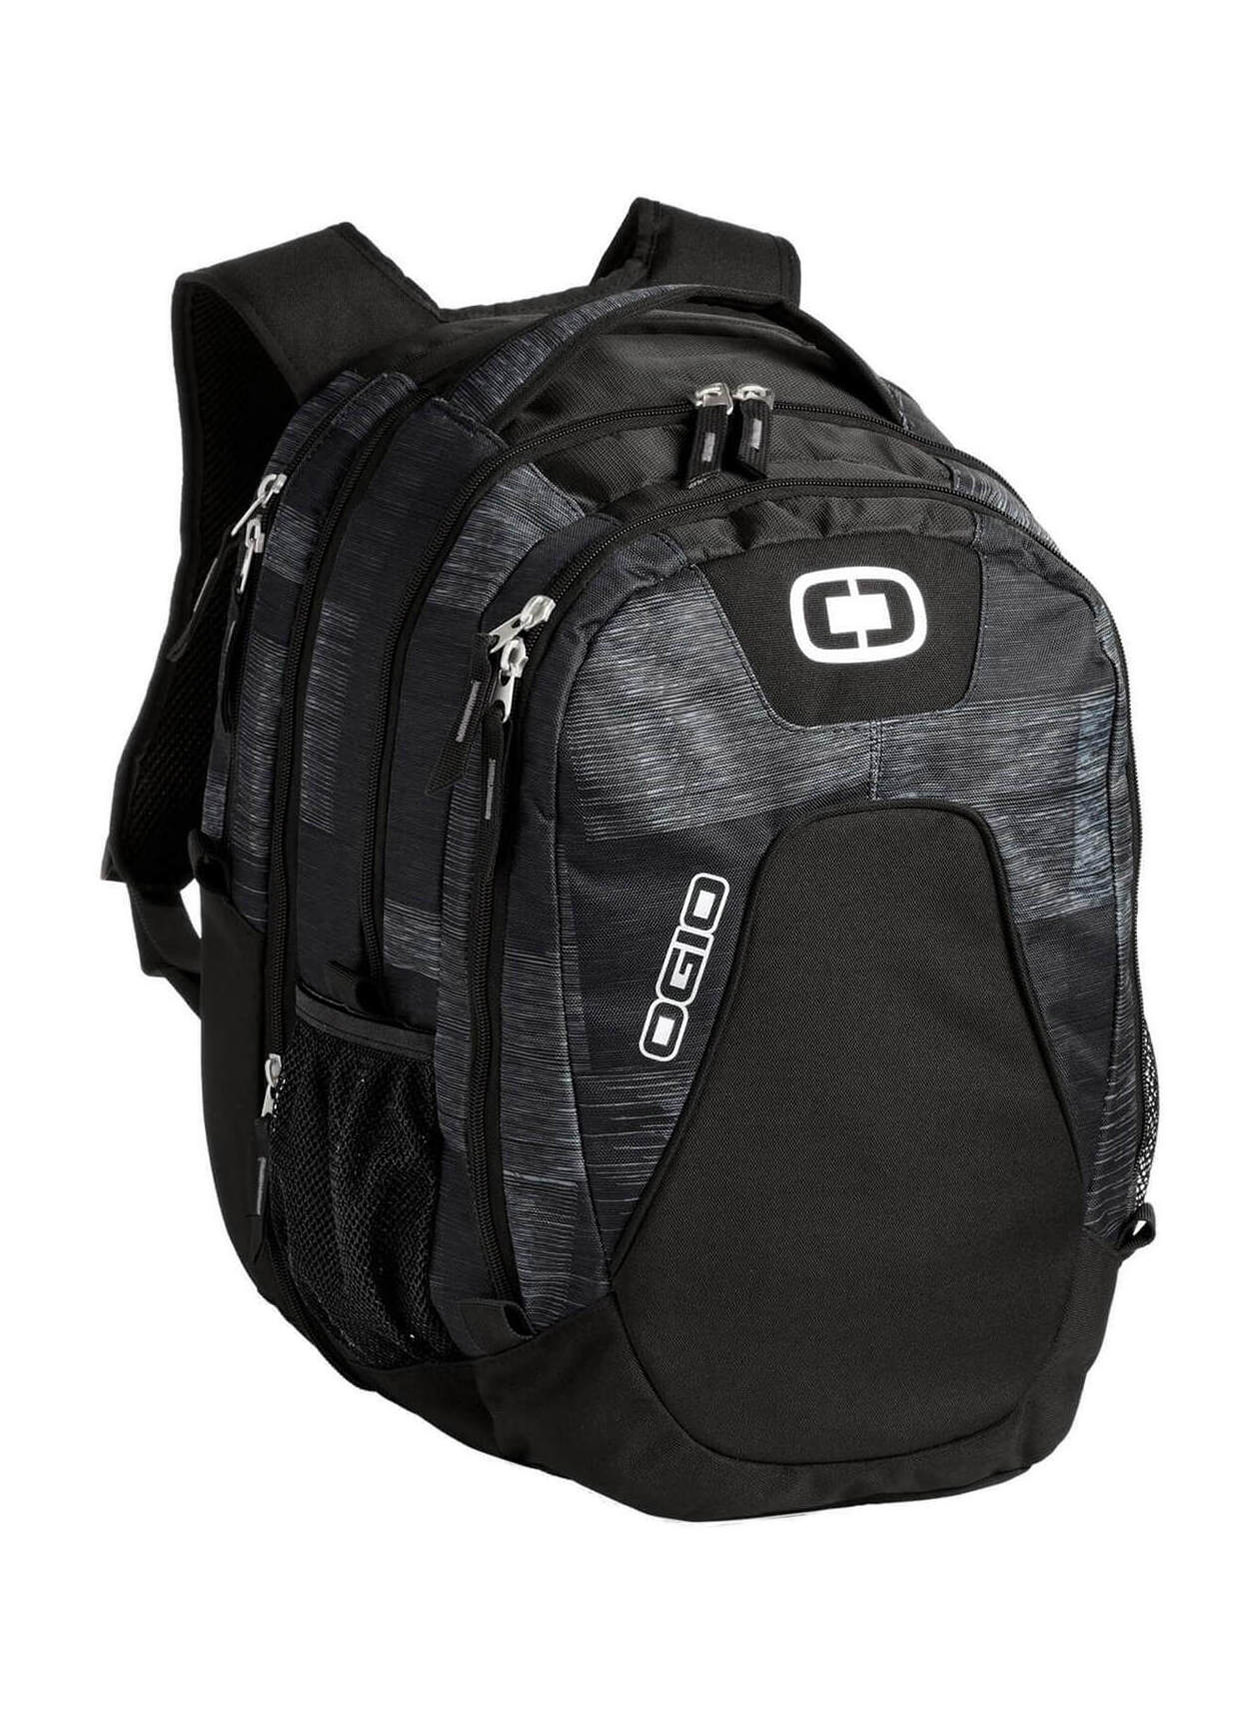 OGIO Charcoal Juggernaut Backpack